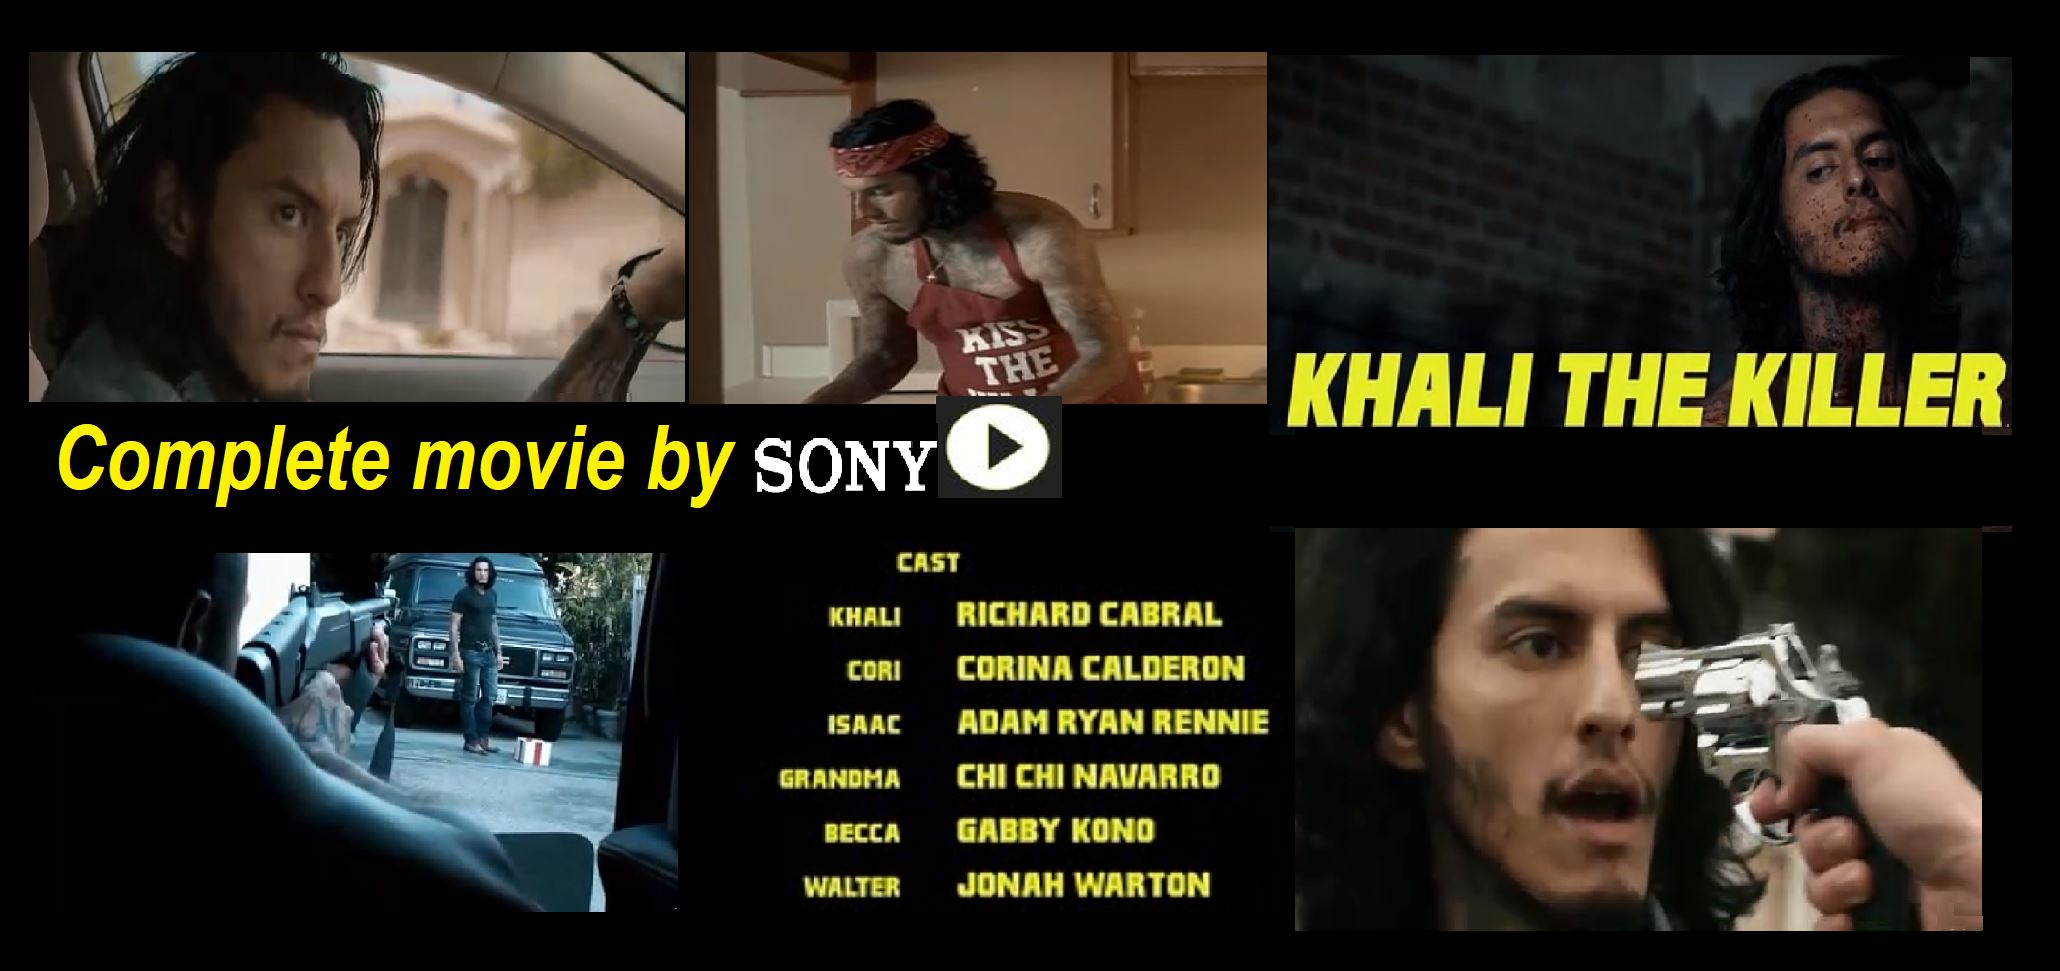 Khali the killer uploaded by Sony